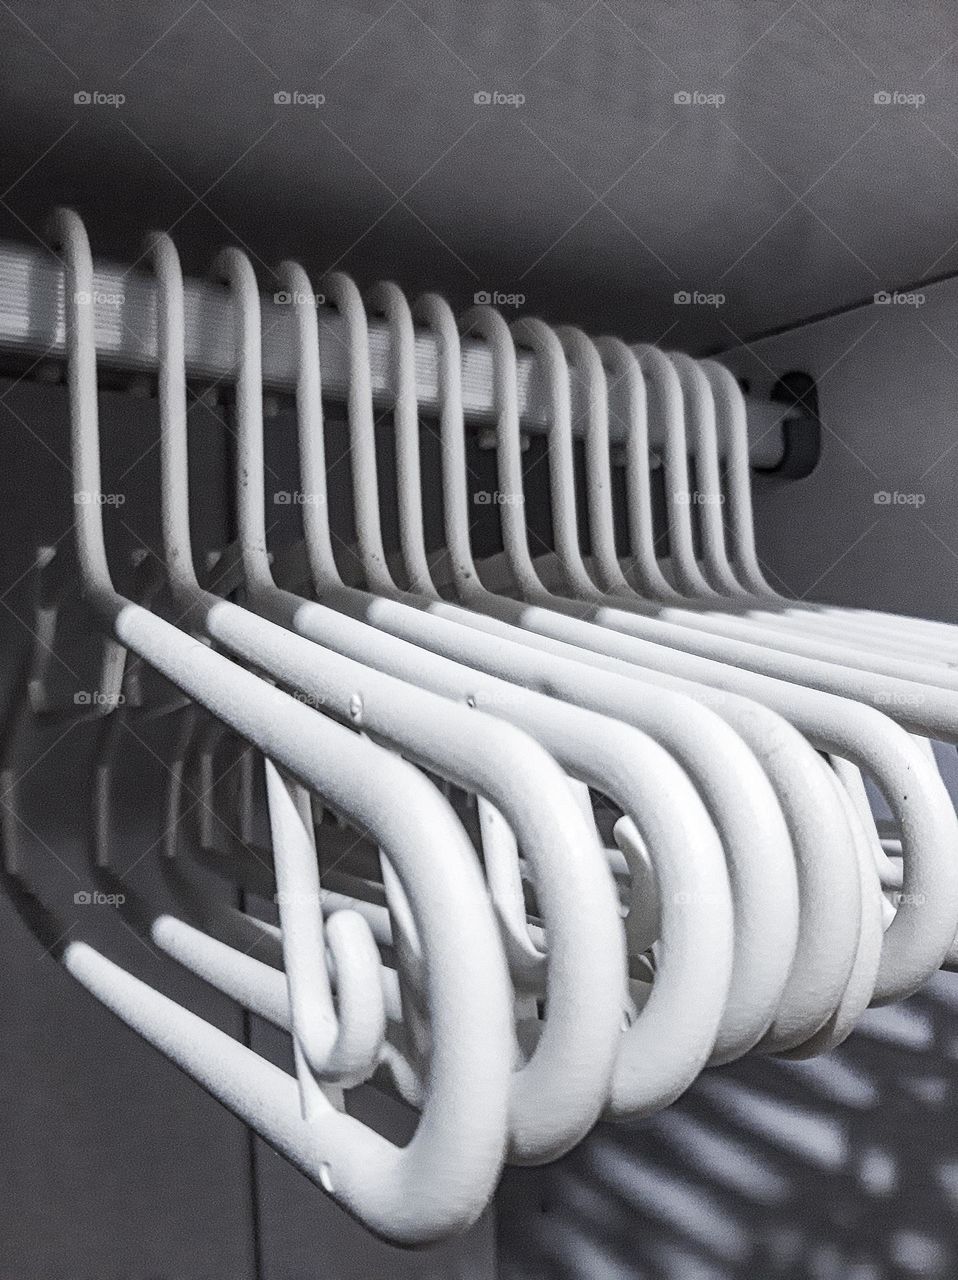 rows of hangers